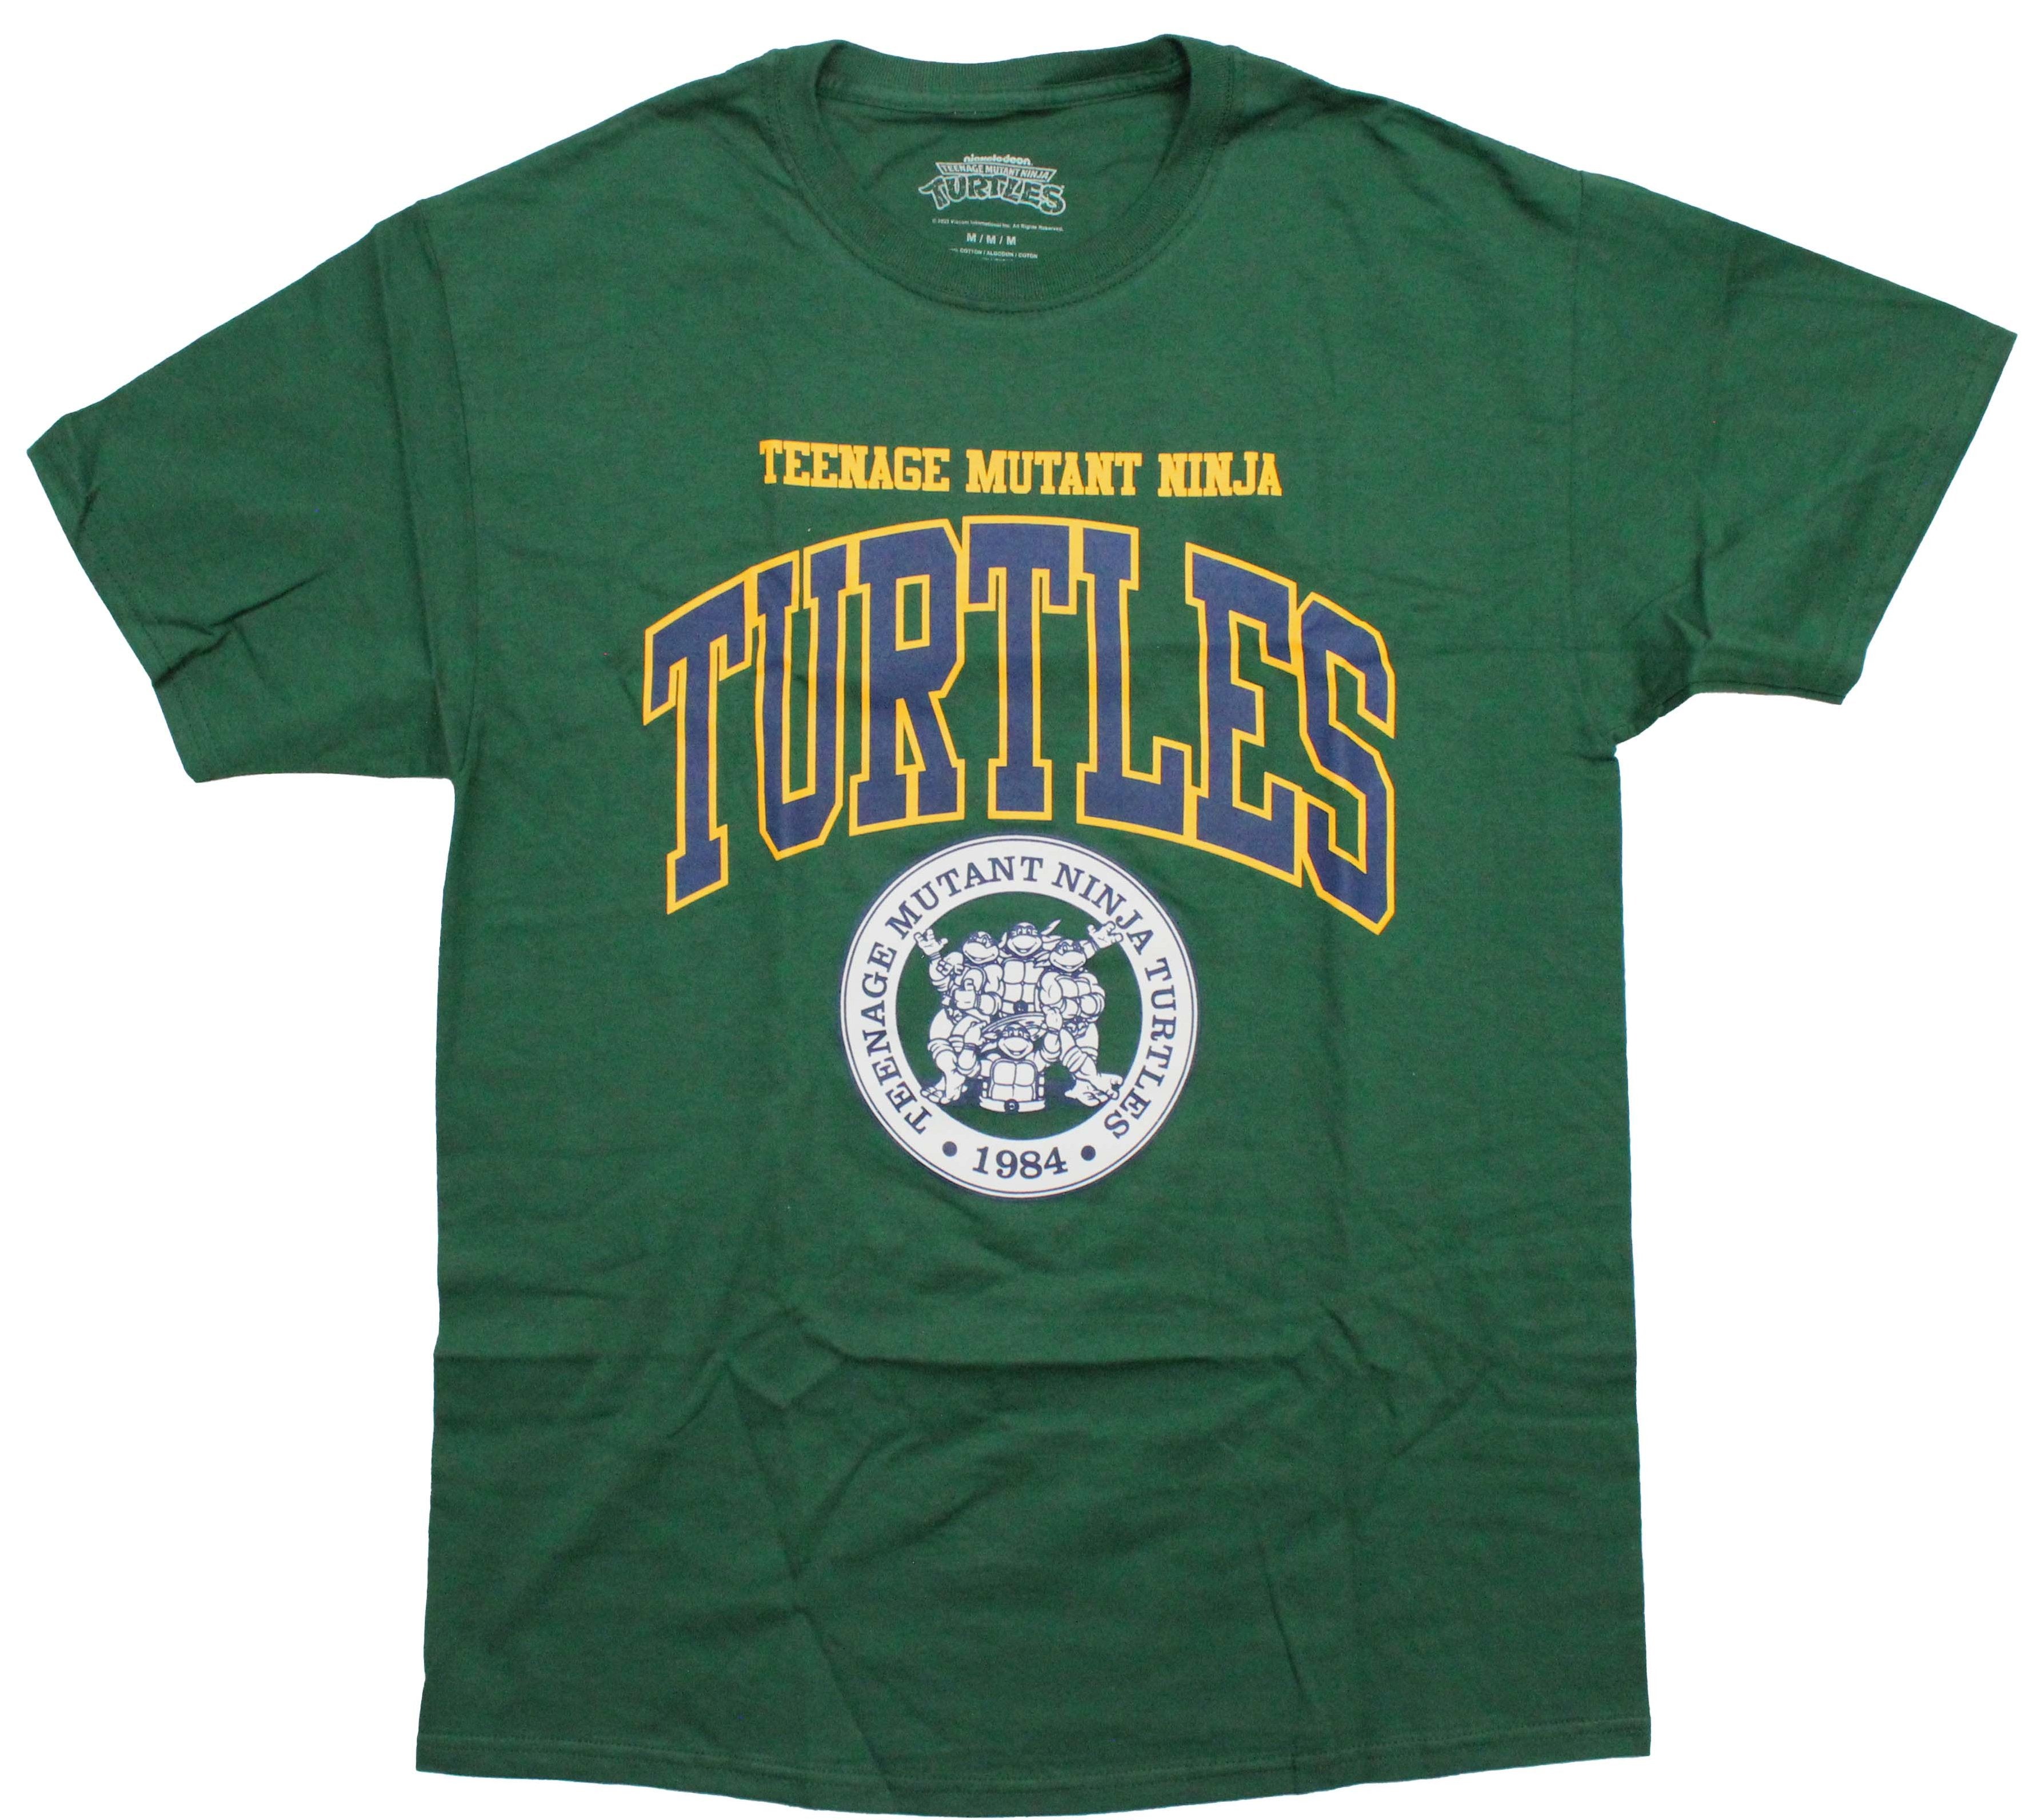 Teenage Mutant Ninja Turtles Mens T-Shirt -1984 Cast in Emblem Logo